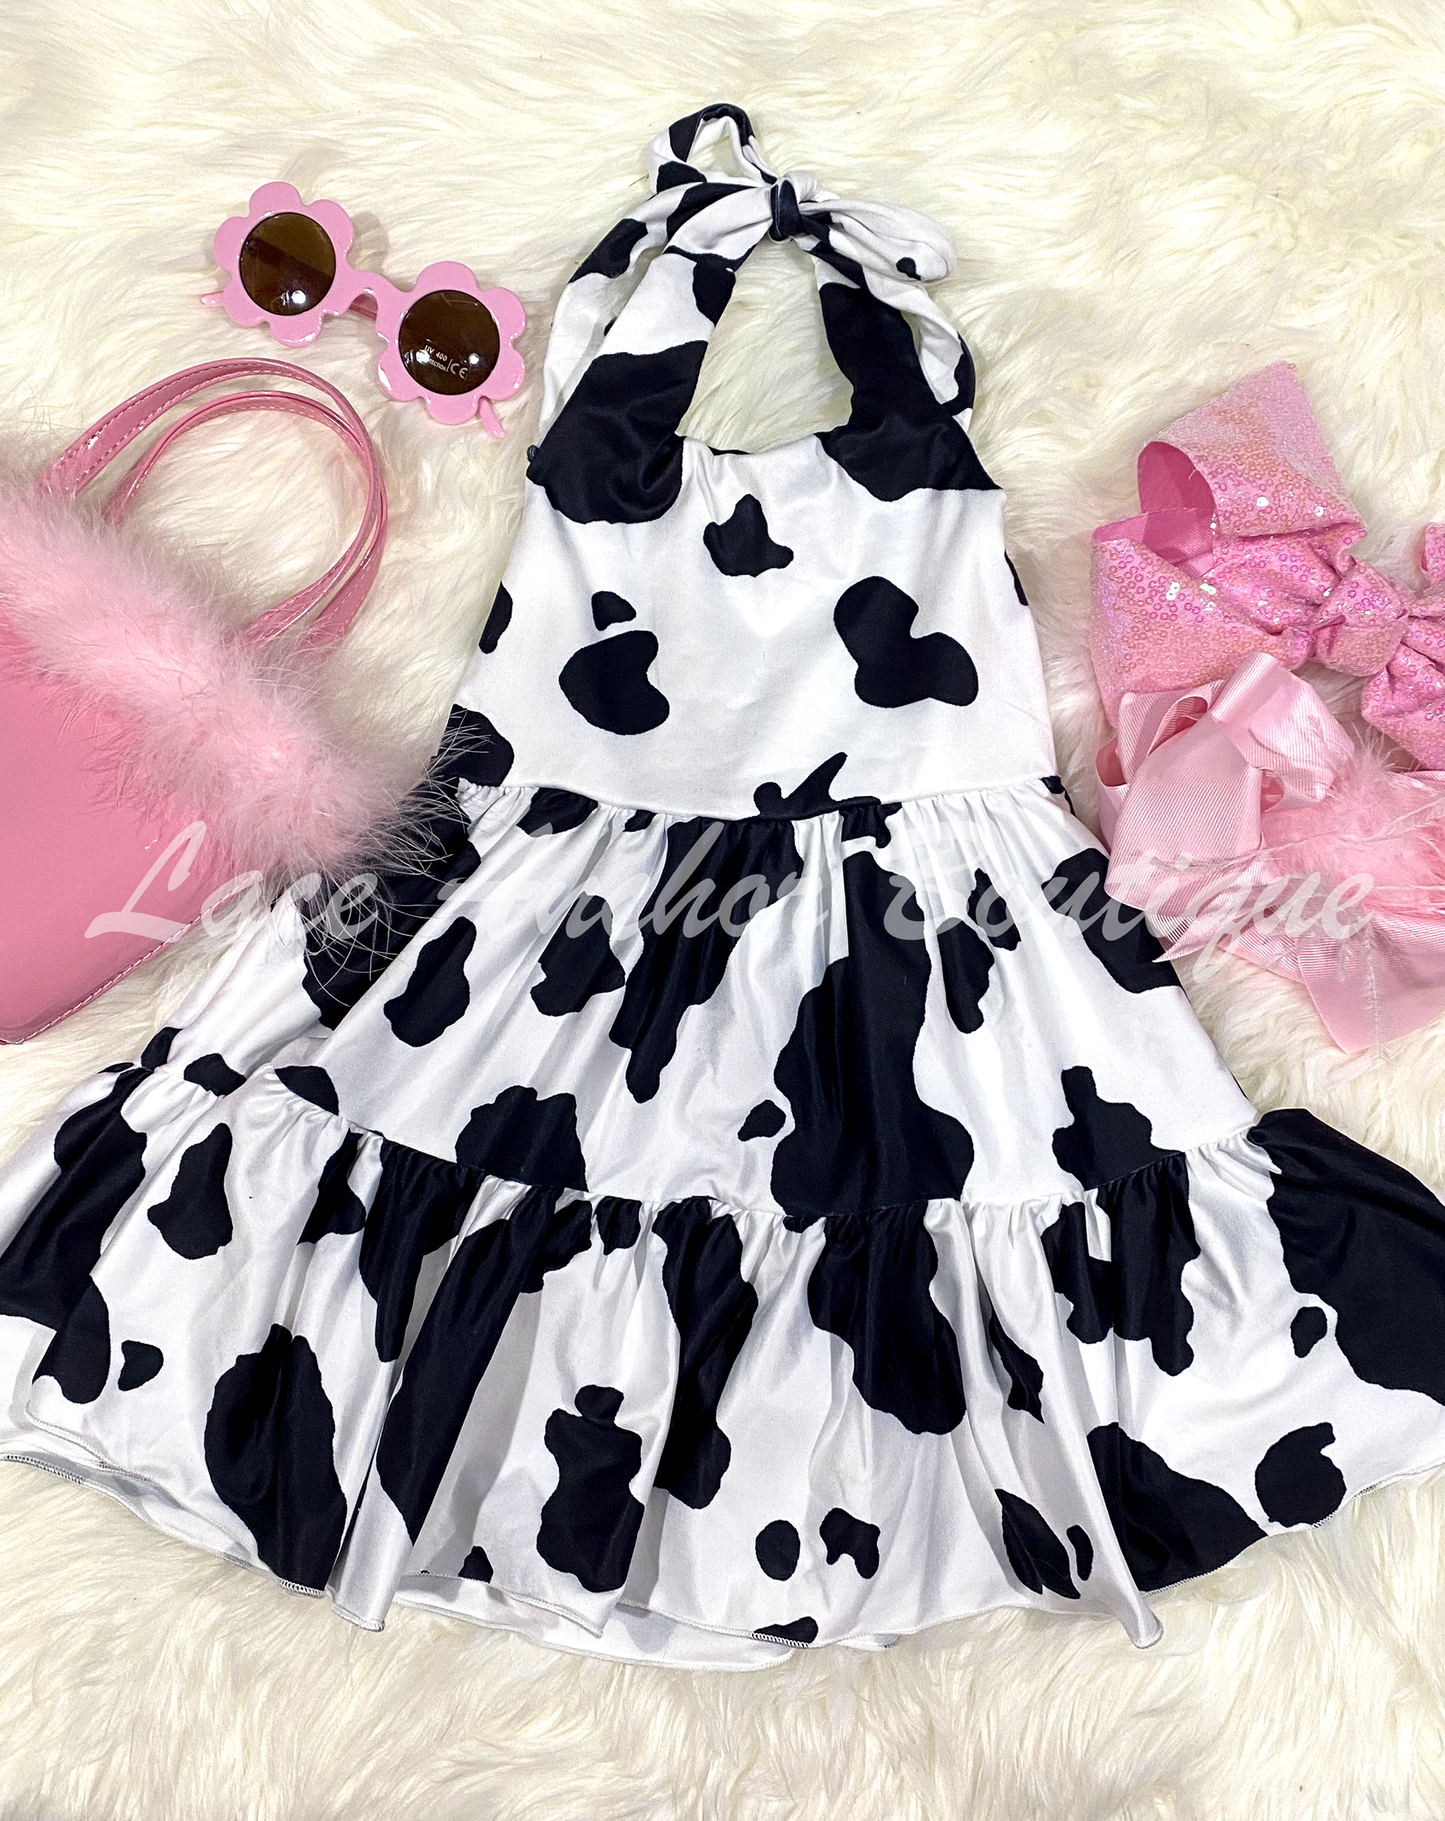 Black & White Cow Print Halter Dress - Animal Print Tied Swing Dress